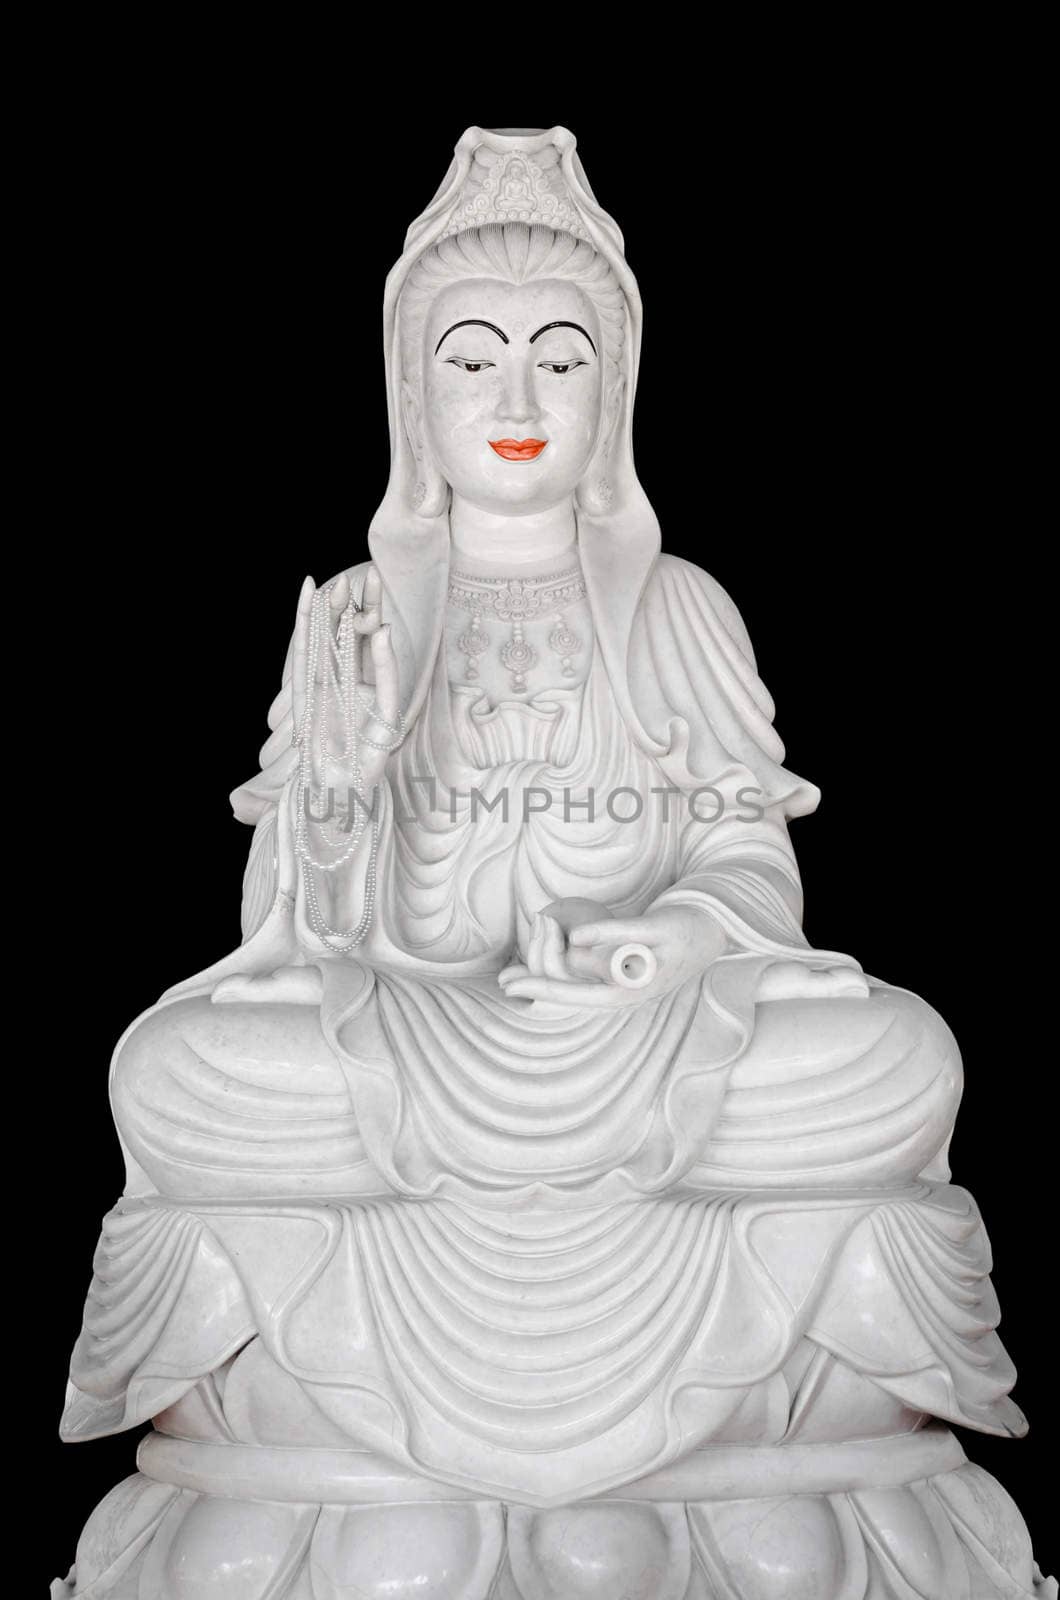 Buddhist figure sculpture, Guanyin Bodhisattva by Gamjai